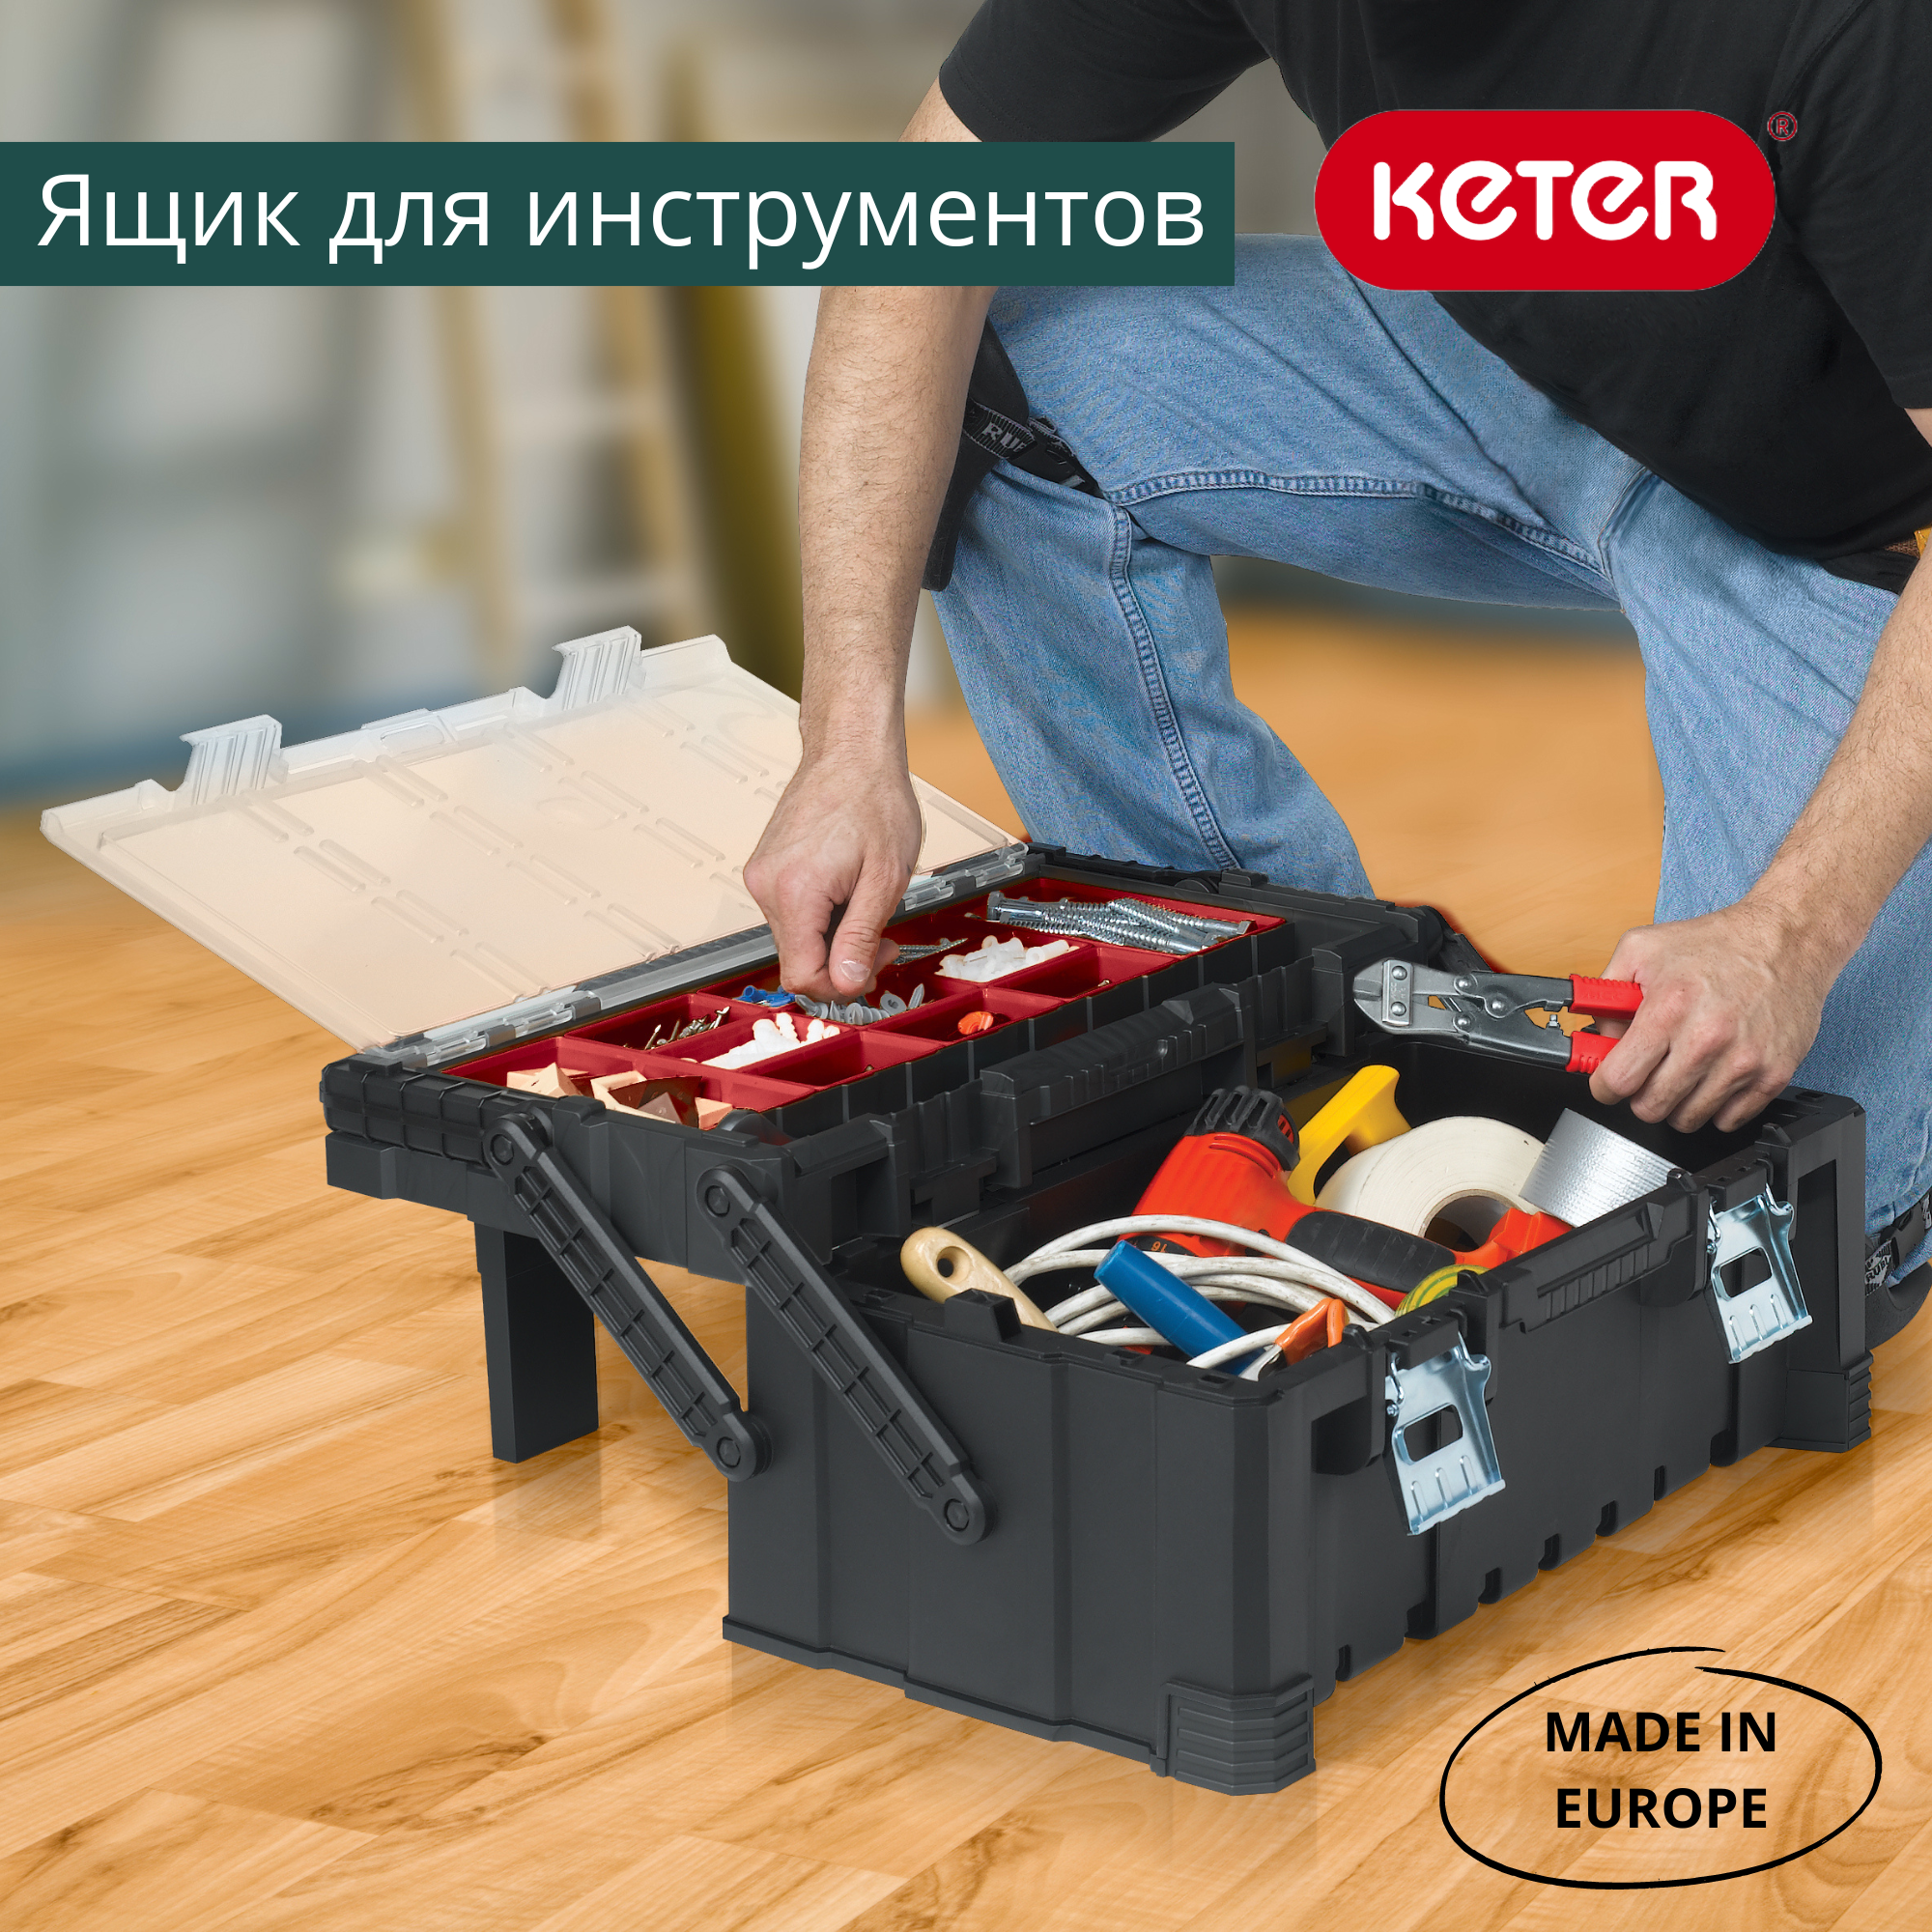 Keter tools. Keter 22" Cantilever Tool Box 17187311. Keter Toolbox 22. Ящик для инструментов Keter Cantilever Cart job Box 17203037. Ящик для инструментов Keter Toolbox Premium.